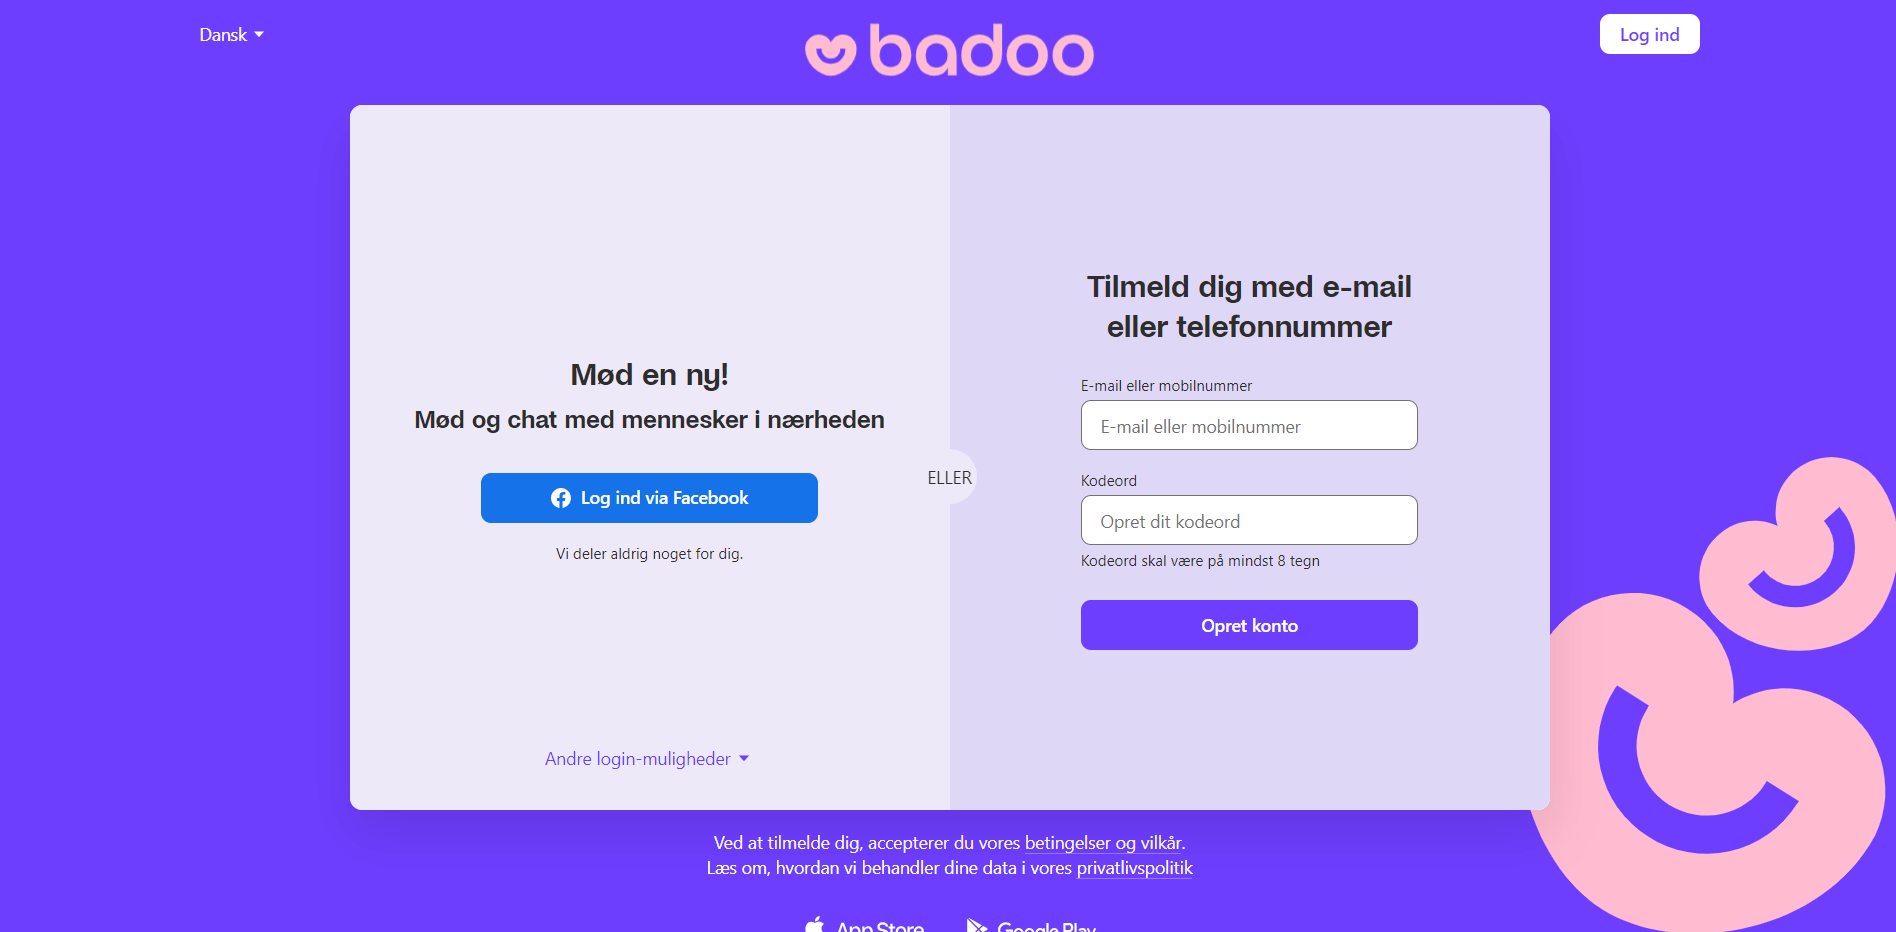 Badoo Danmark